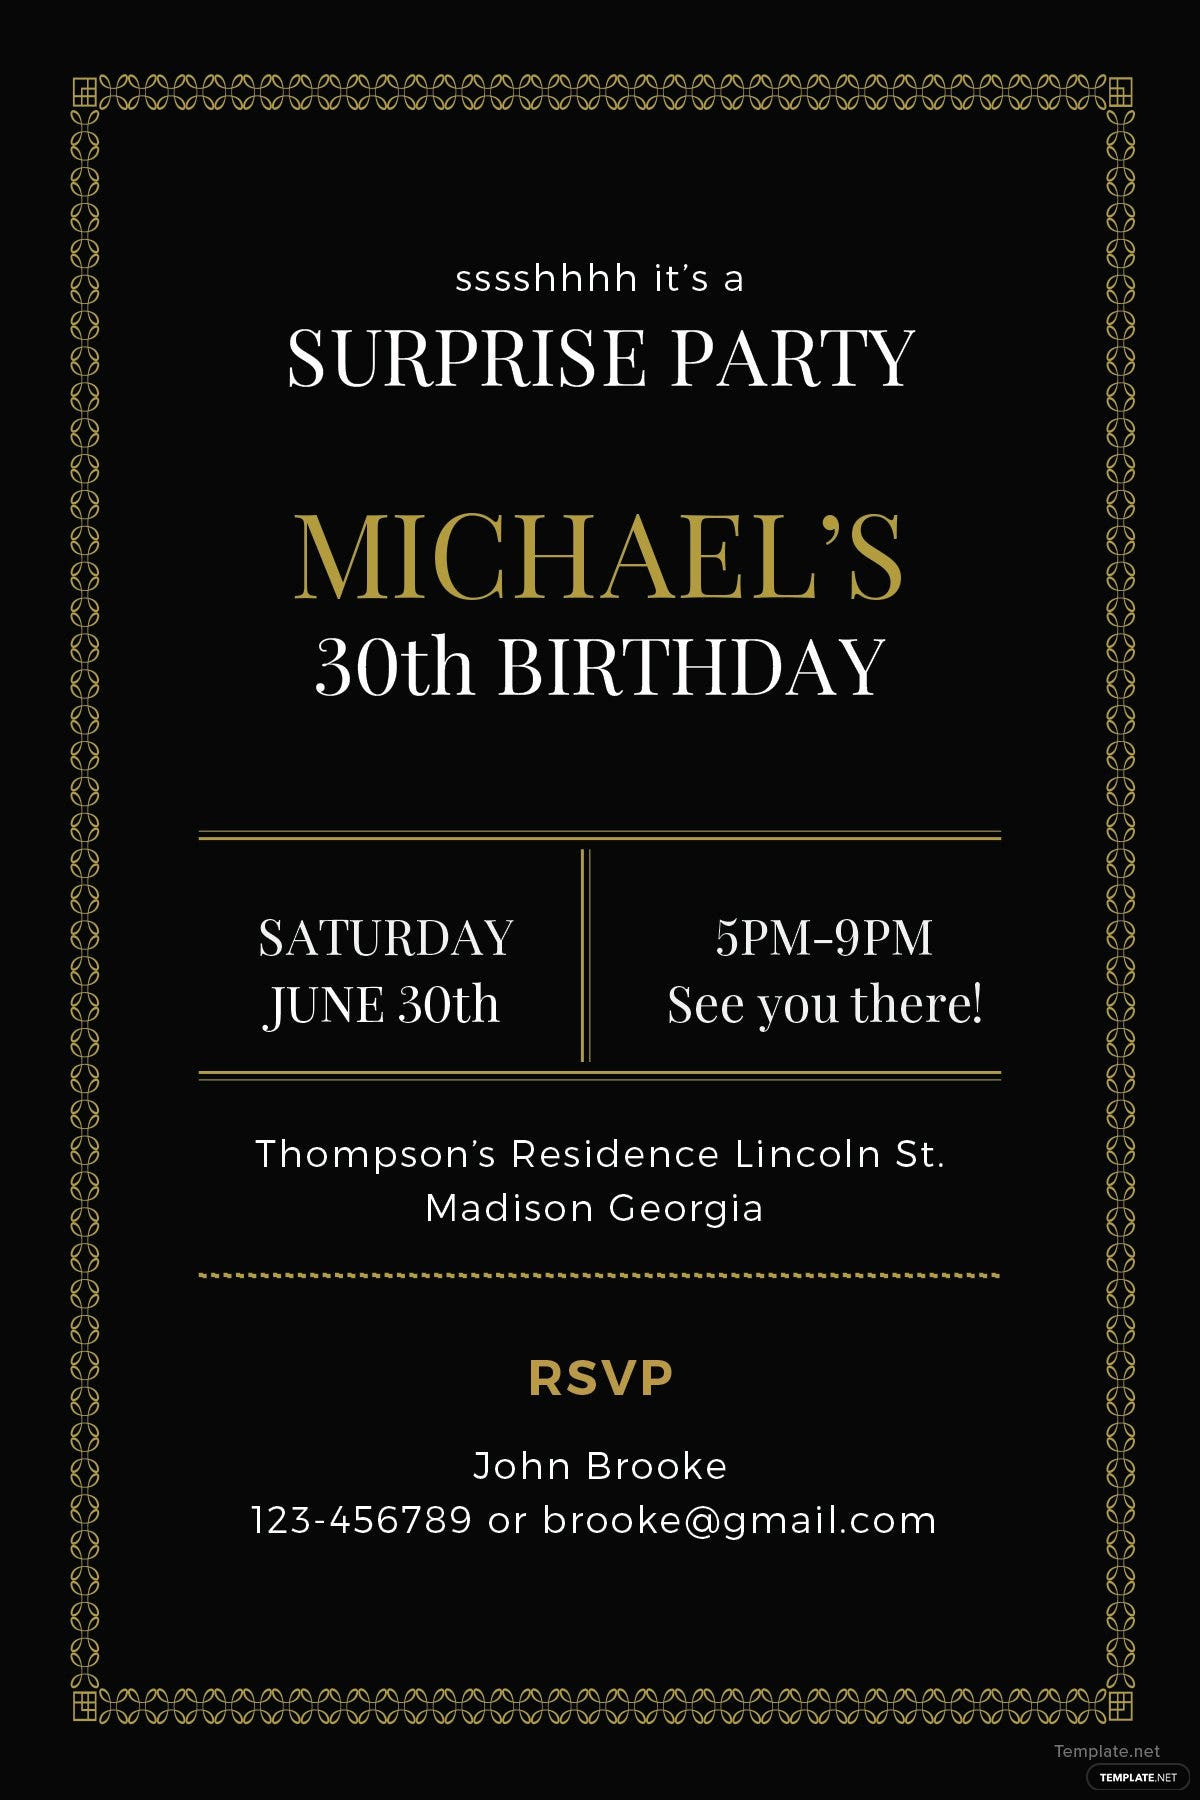 Free Printable Surprise Birthday Invitations
 Free Surprise Party Invitation Template in Adobe